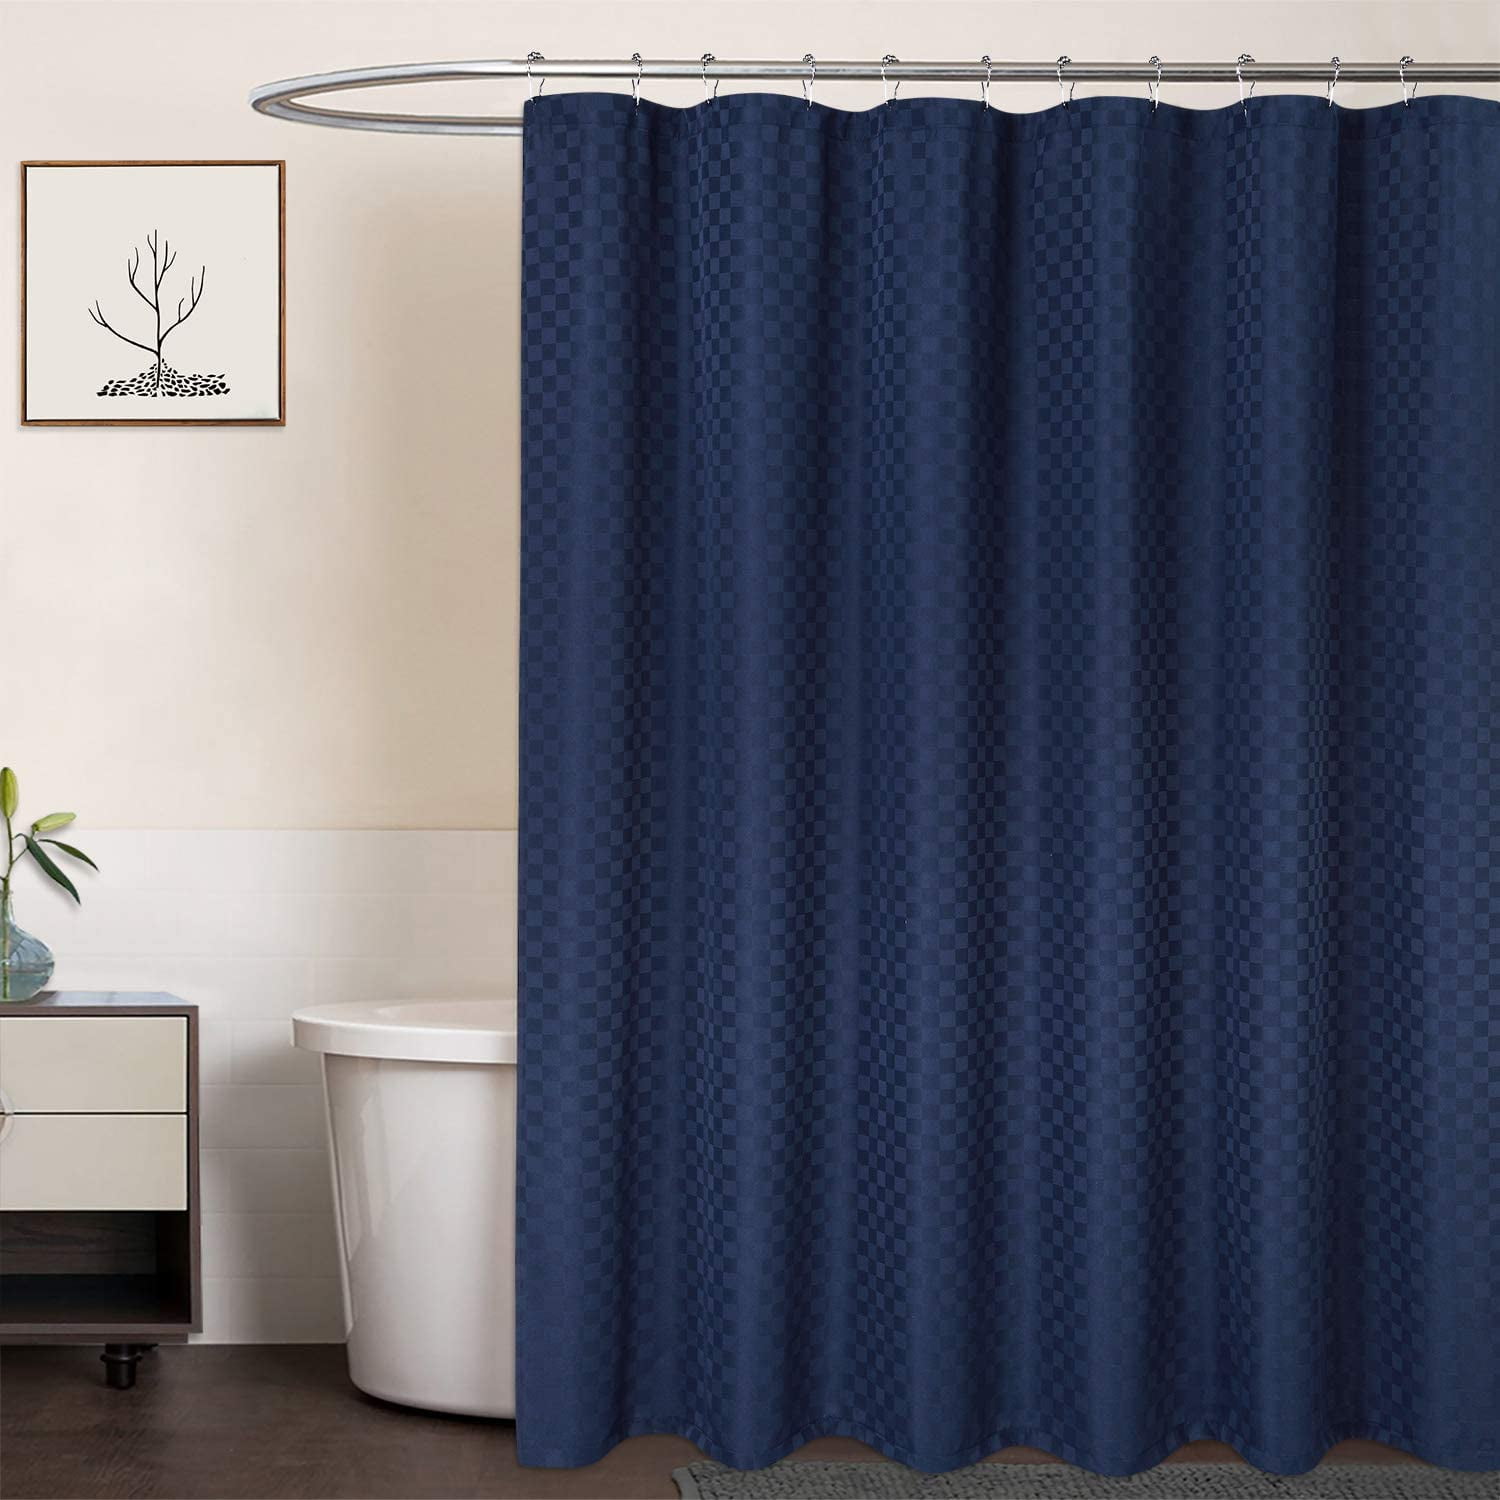 GlowSol Shower Curtain 72x72 Heavy Duty Thick Hotel Luxury Waterproof  Plaid Fabric Shower Curtain for Bathroom Washable, Gray, 1 Panel 